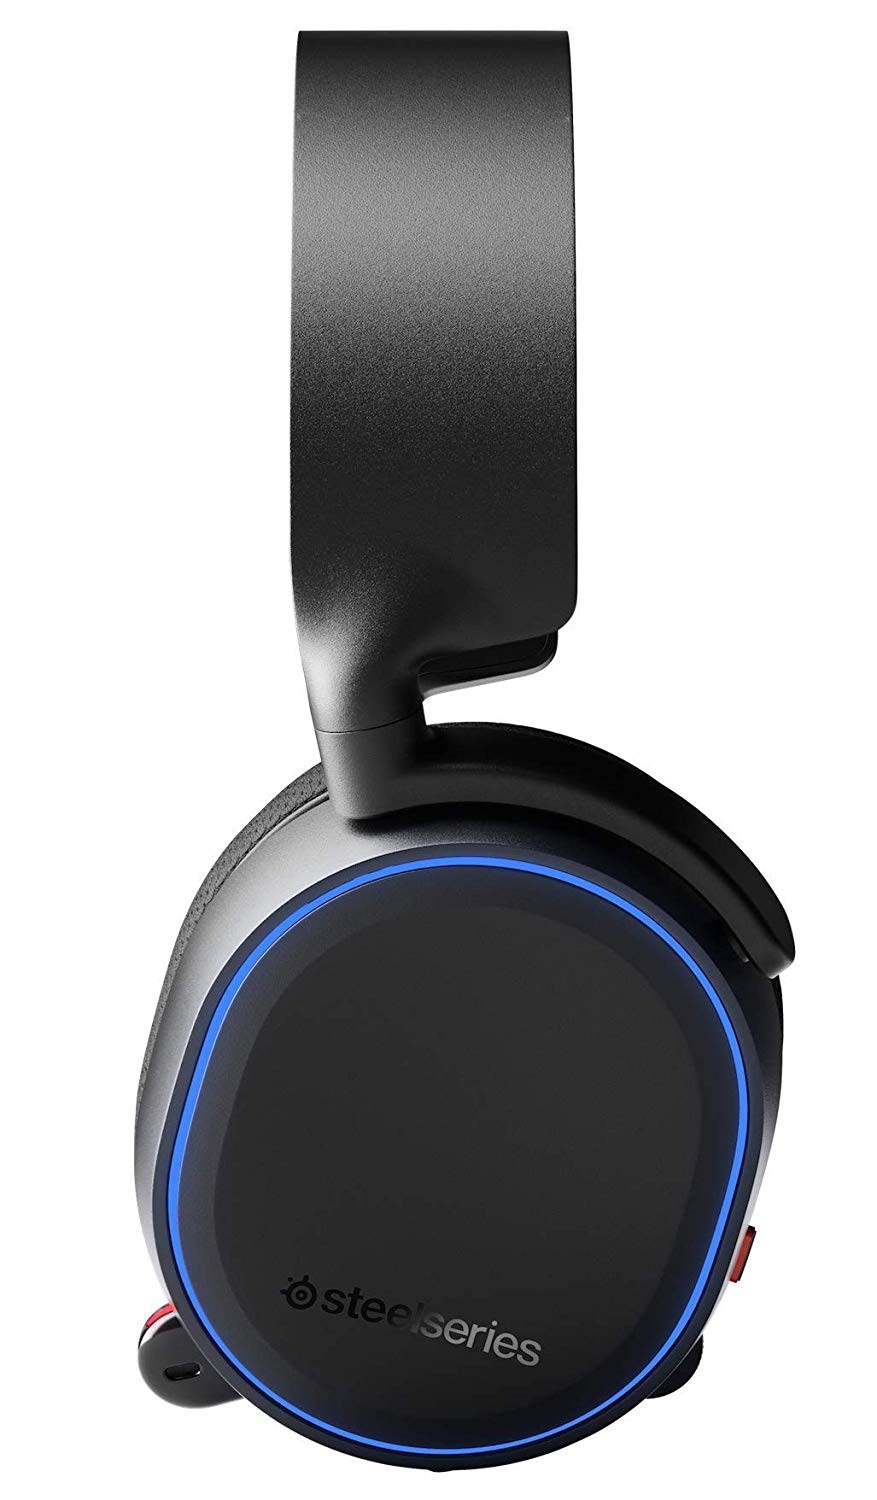 Steelseries Arctis 5 Black (2019 Edition) gaming headset